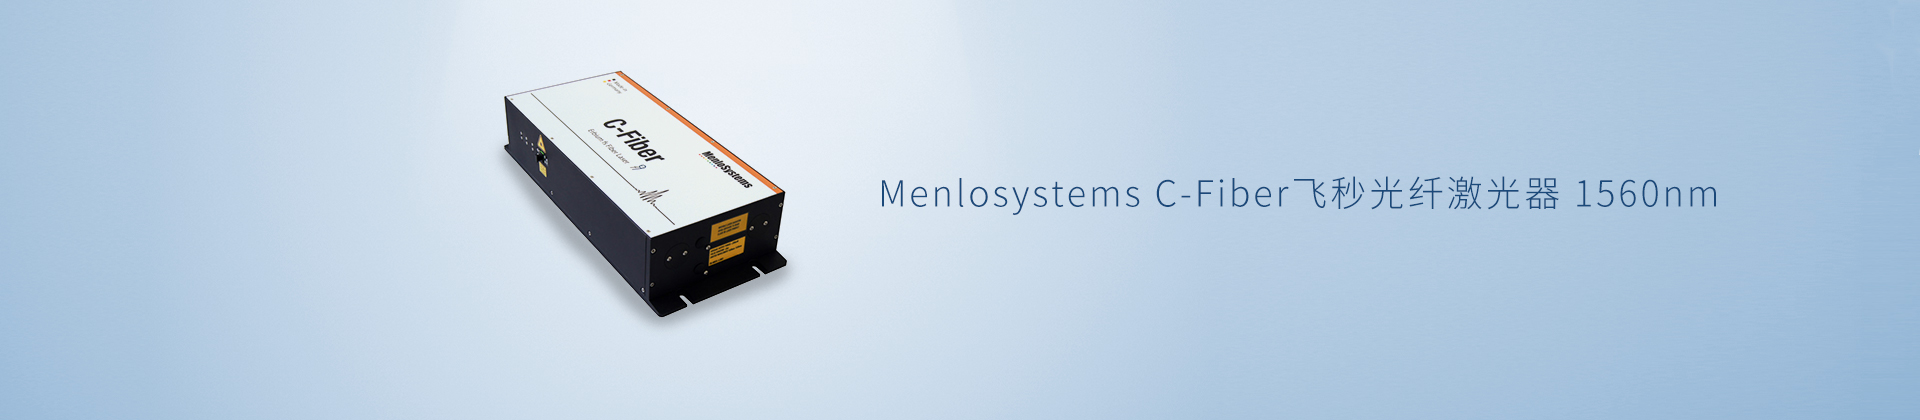 Menlosystems C-Fiber飞秒光纤激光器 1560nm